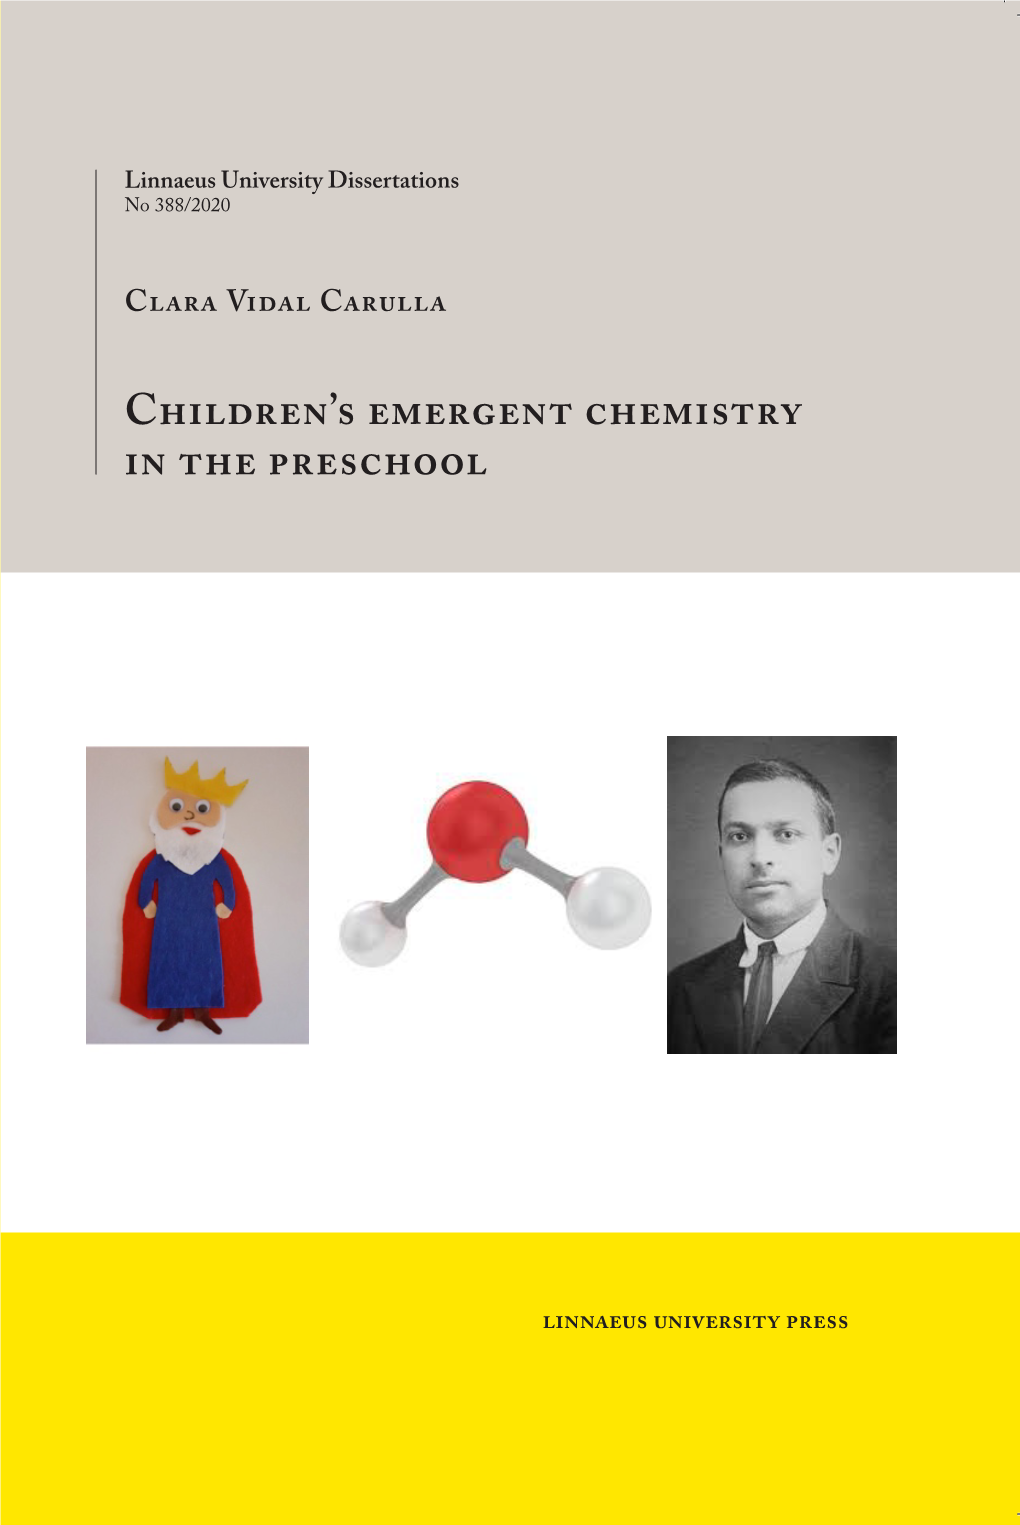 Children's Emergent Chemistry in the Preschool